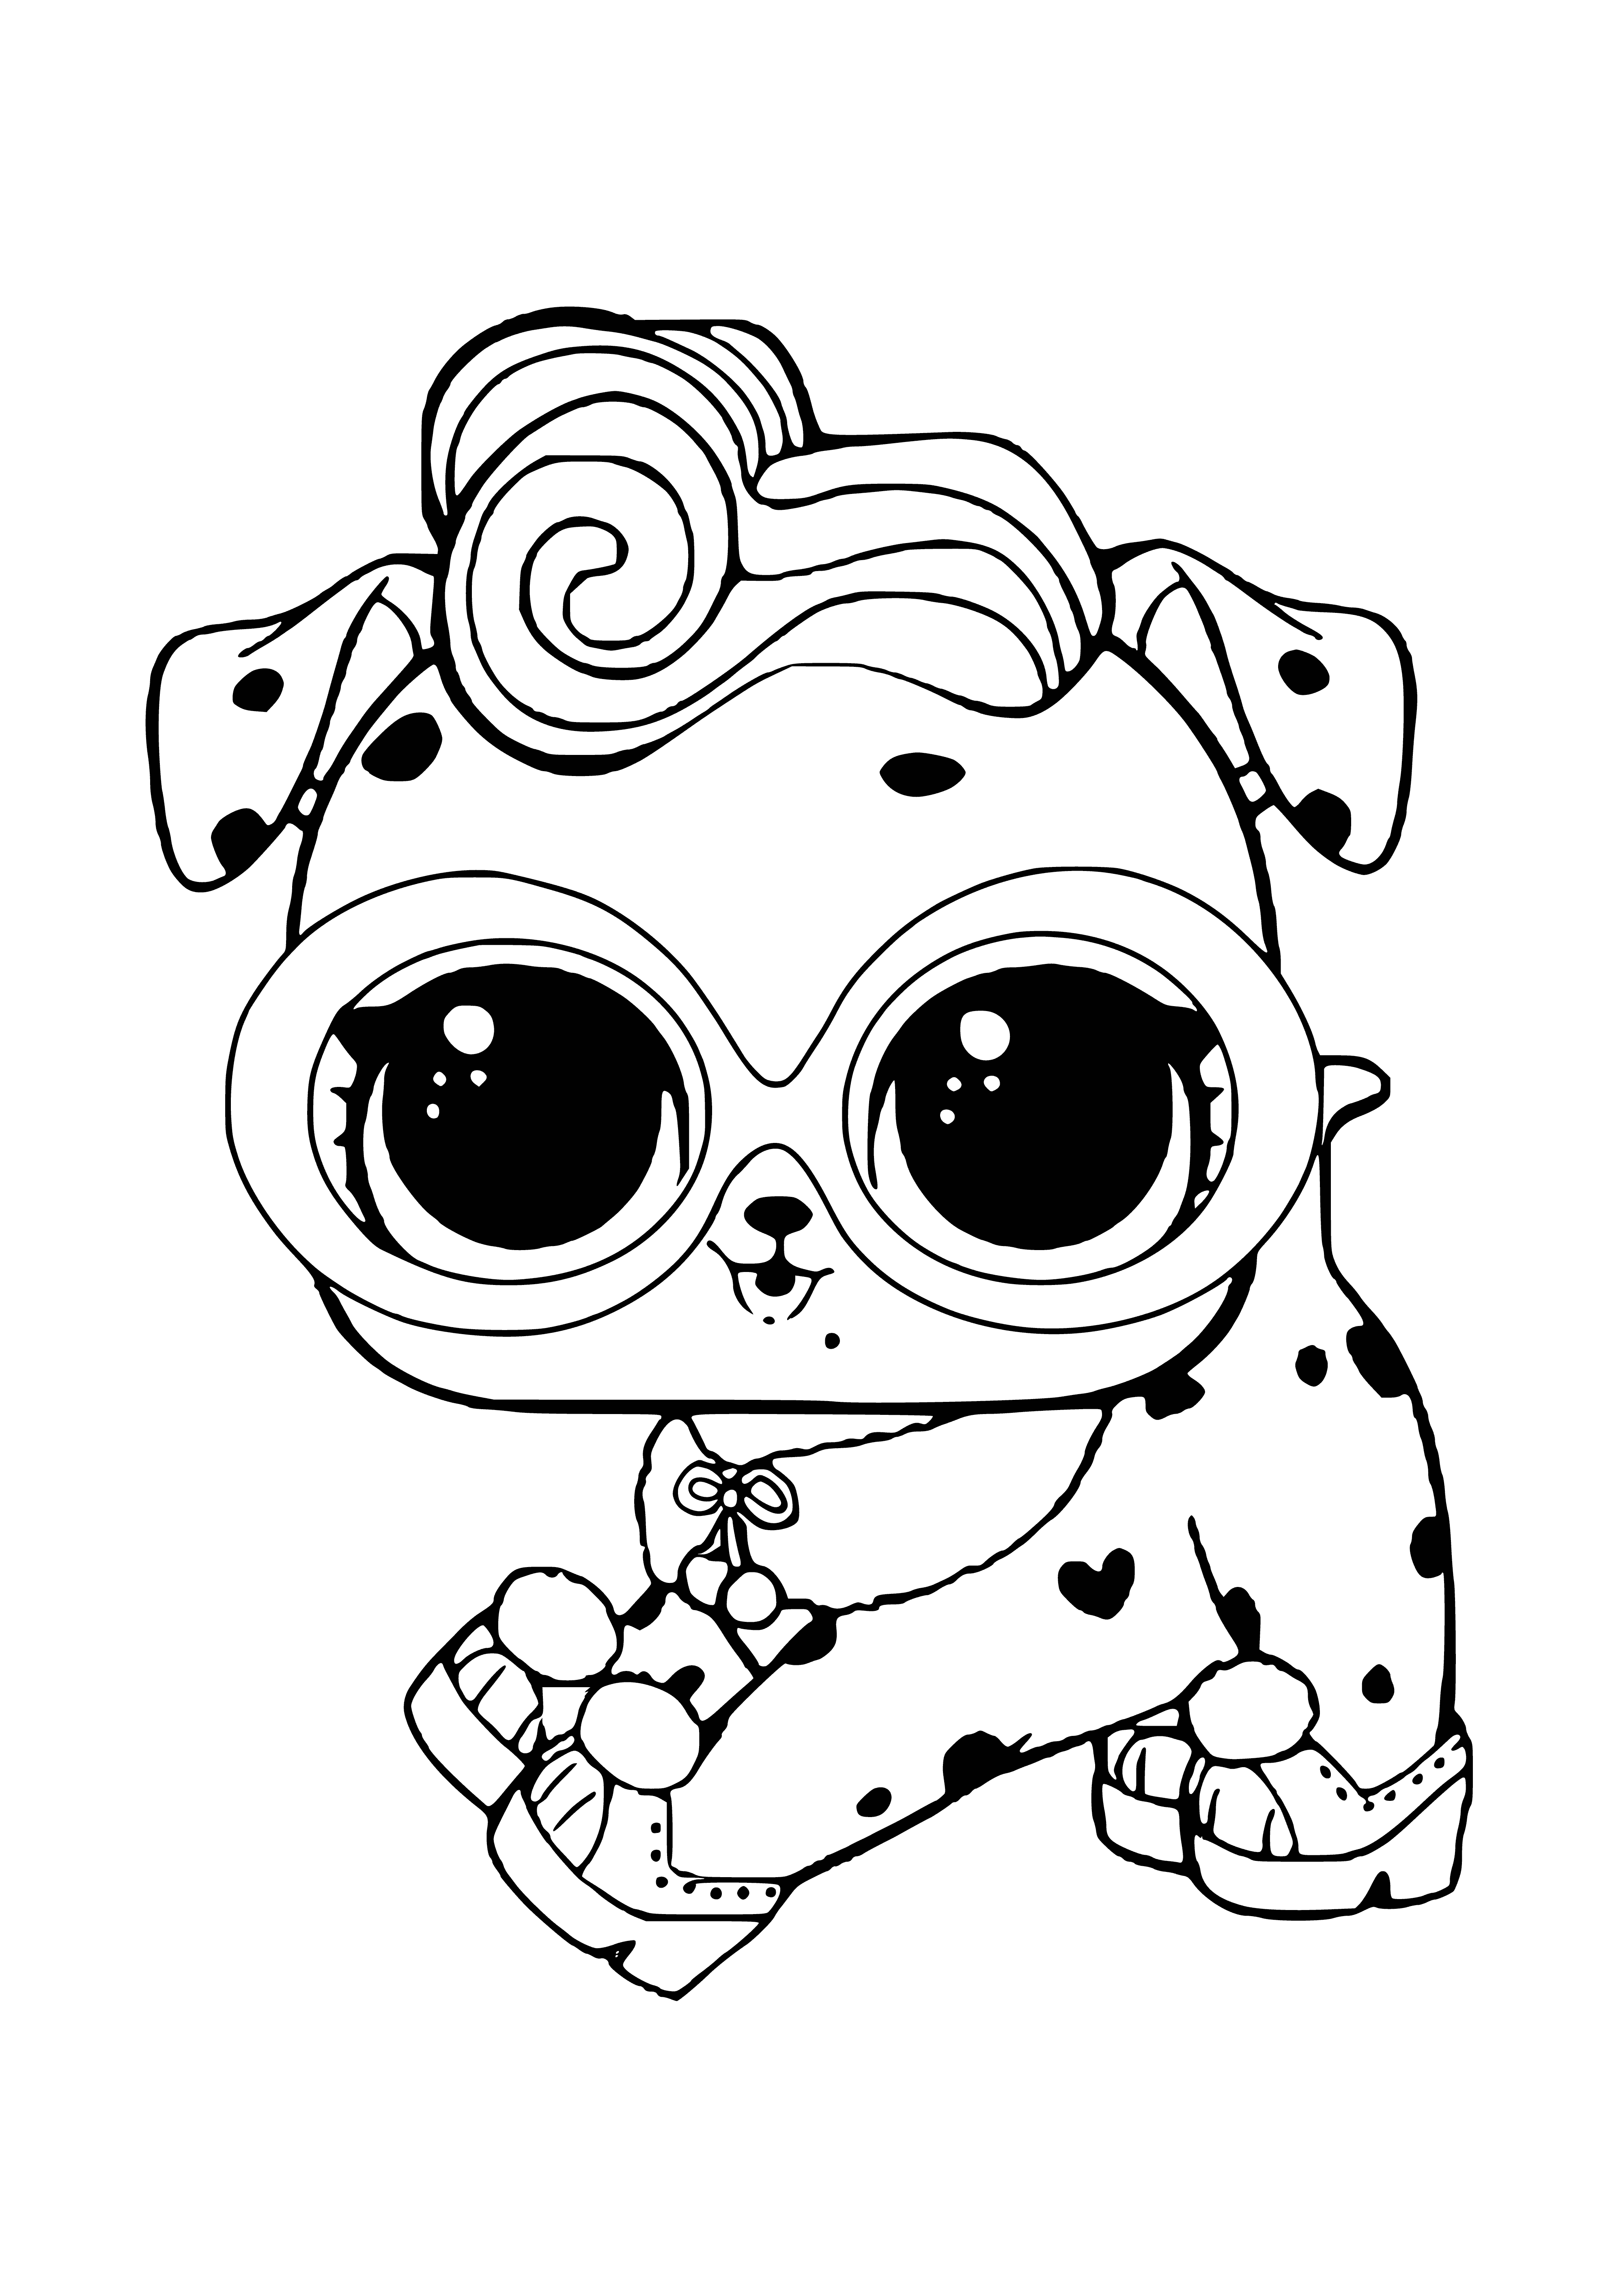 LOL pet Dalmatian coloring page